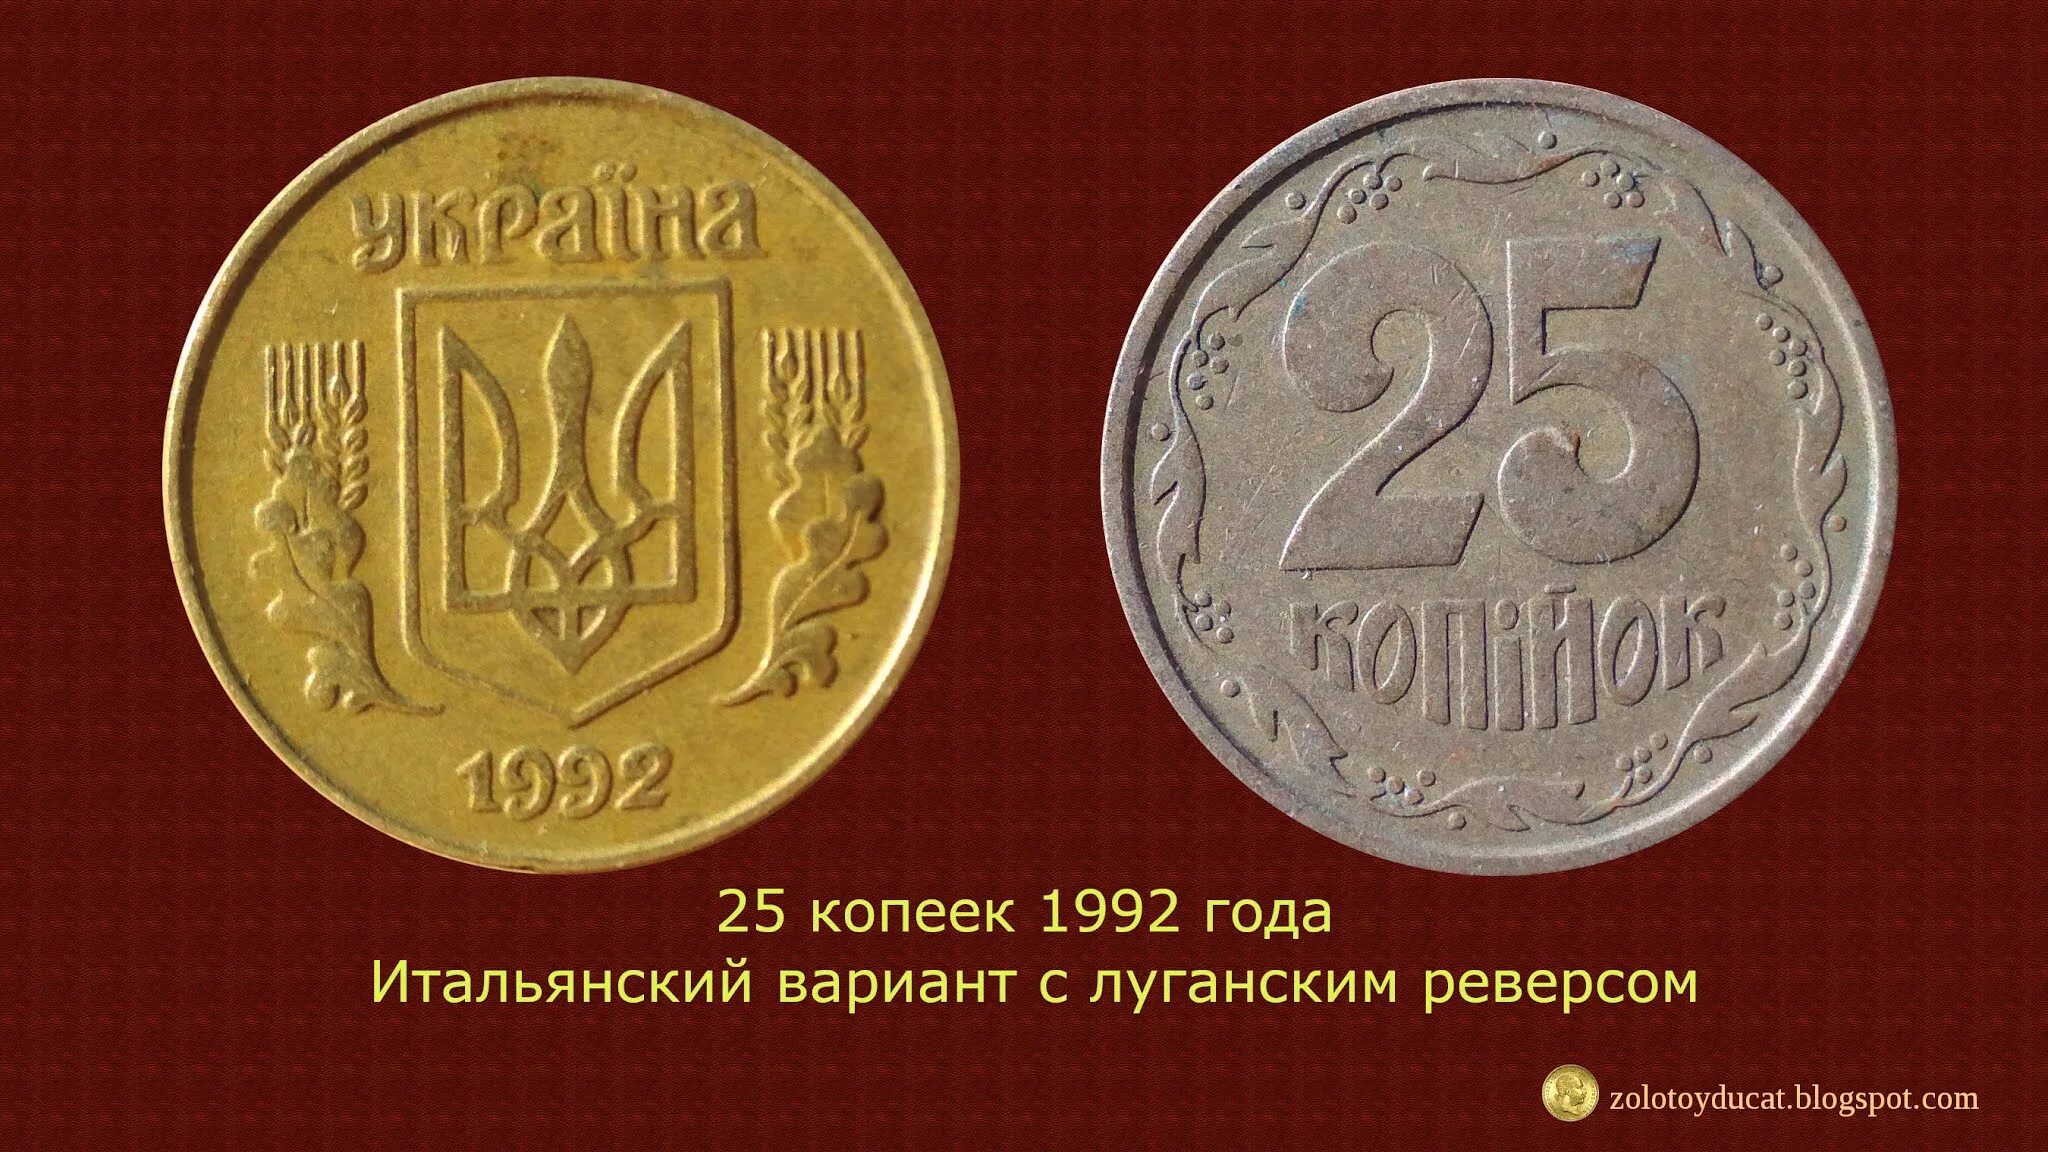 25 р сколько копеек. Монета 25 копеек 1992 года. 25 Украинских копеек 1992 года. Украинская монета 25 копеек 1992. 25 Копеек 1992 СССР.